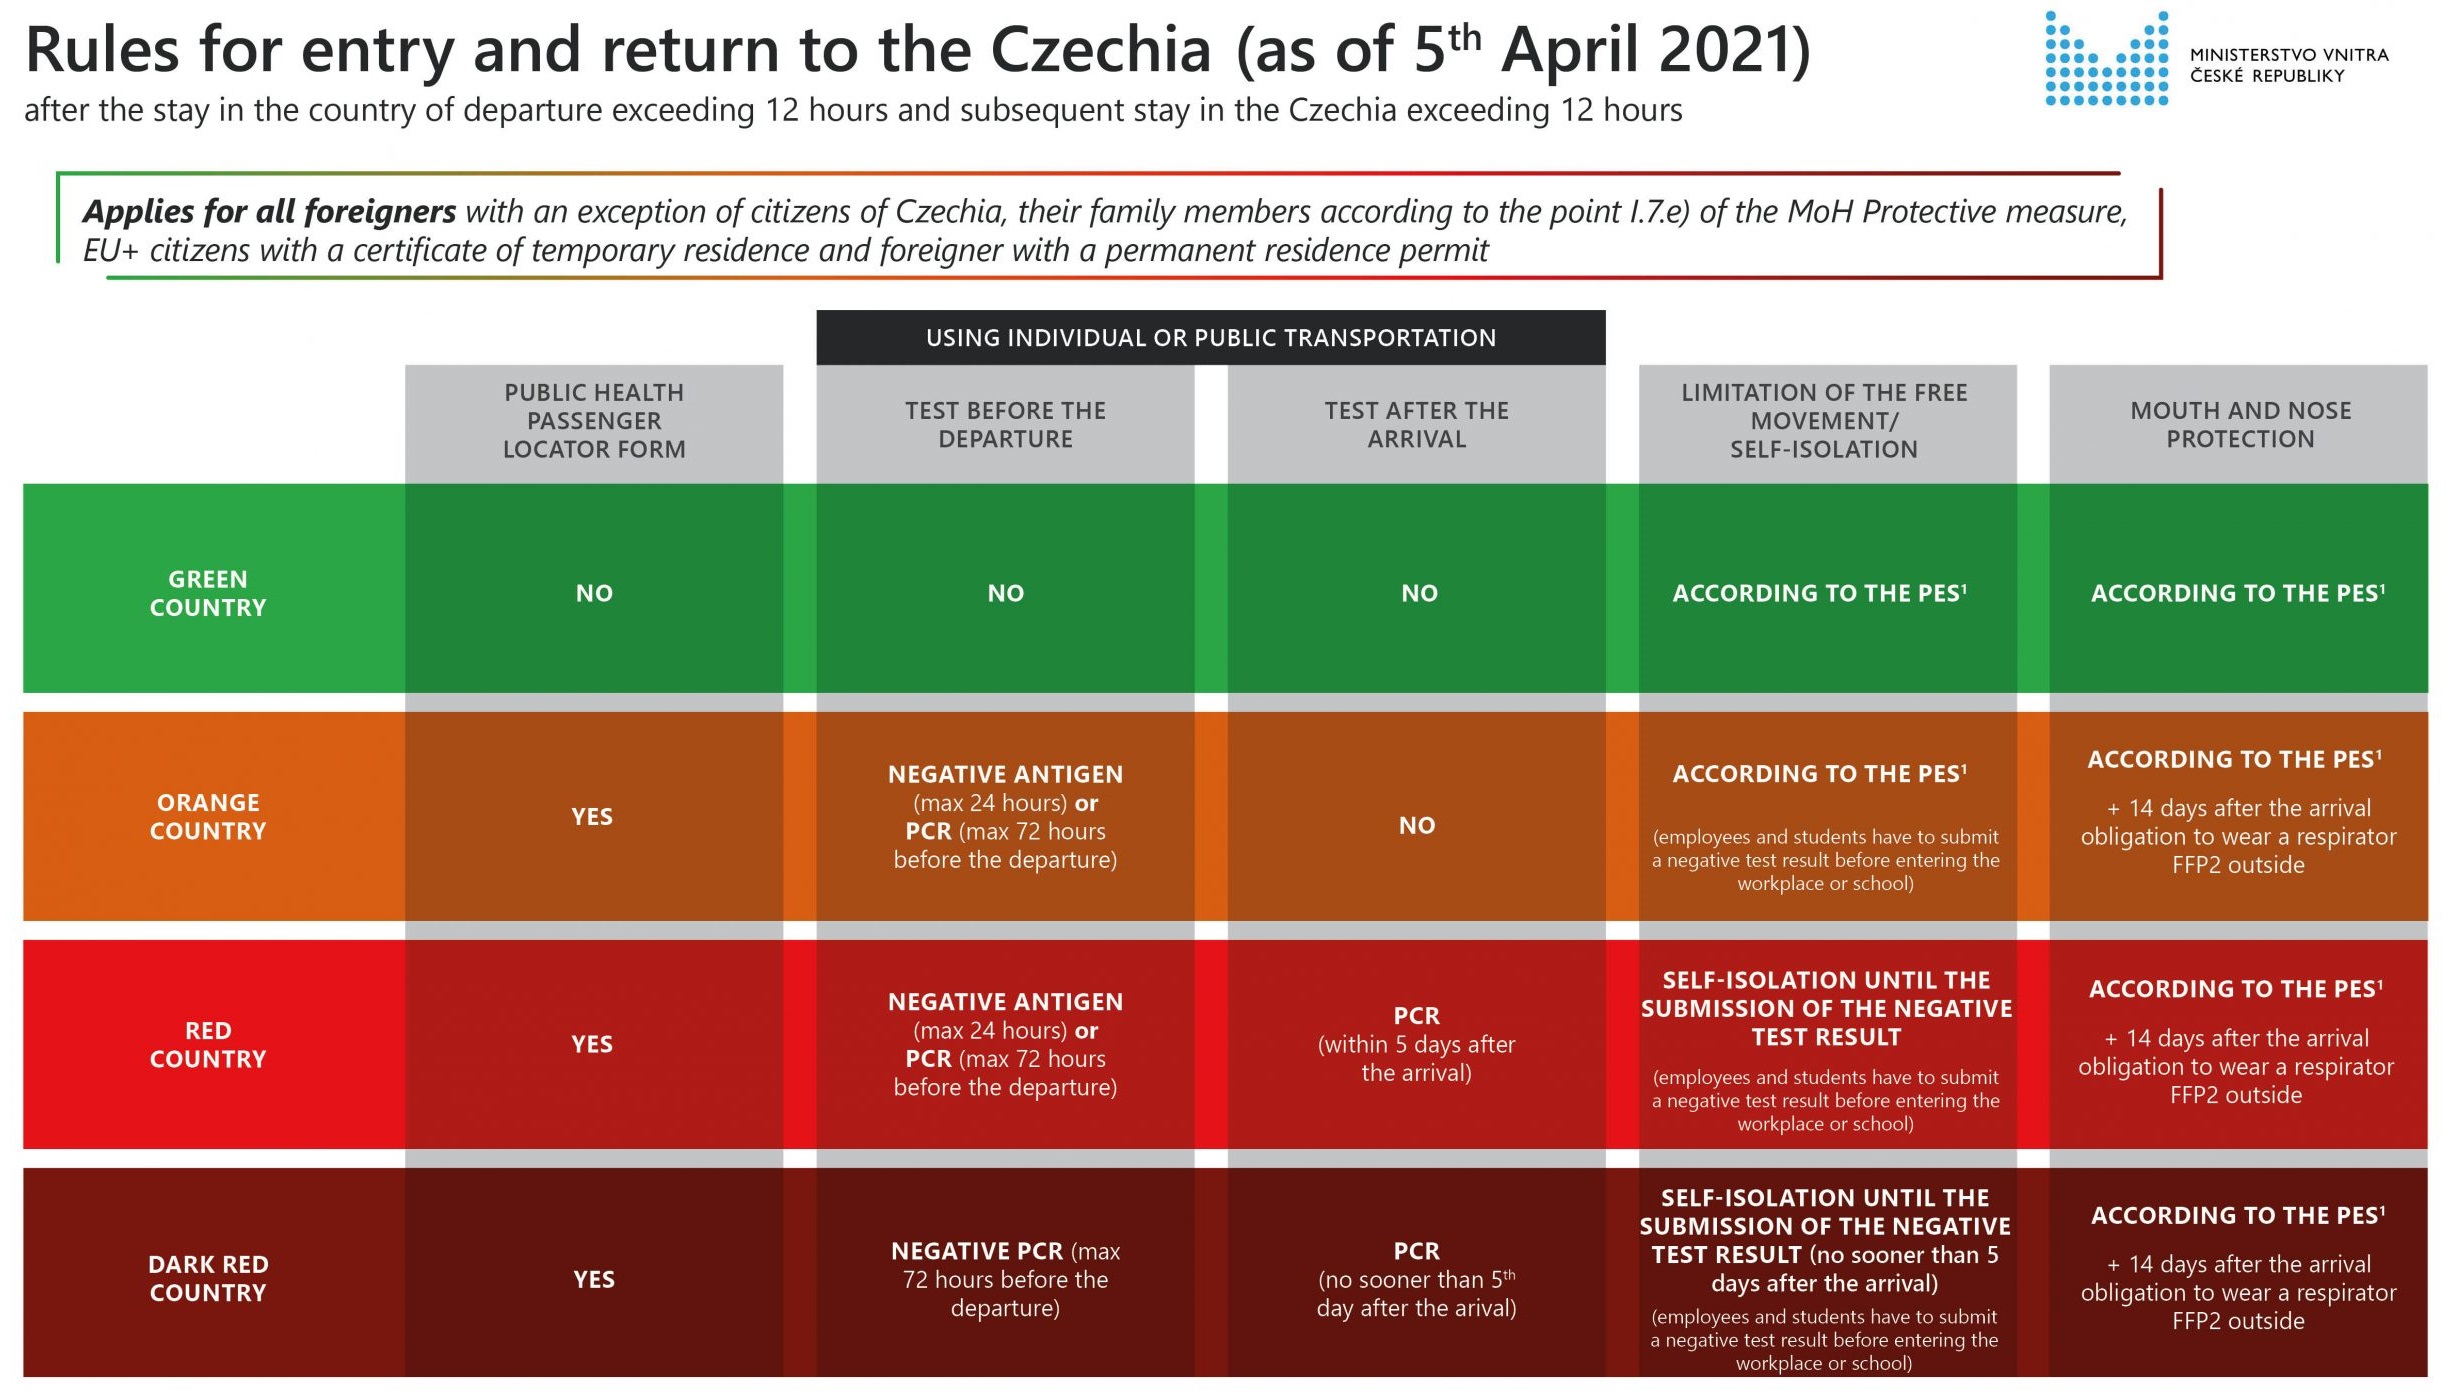 czech republic travel restrictions uk